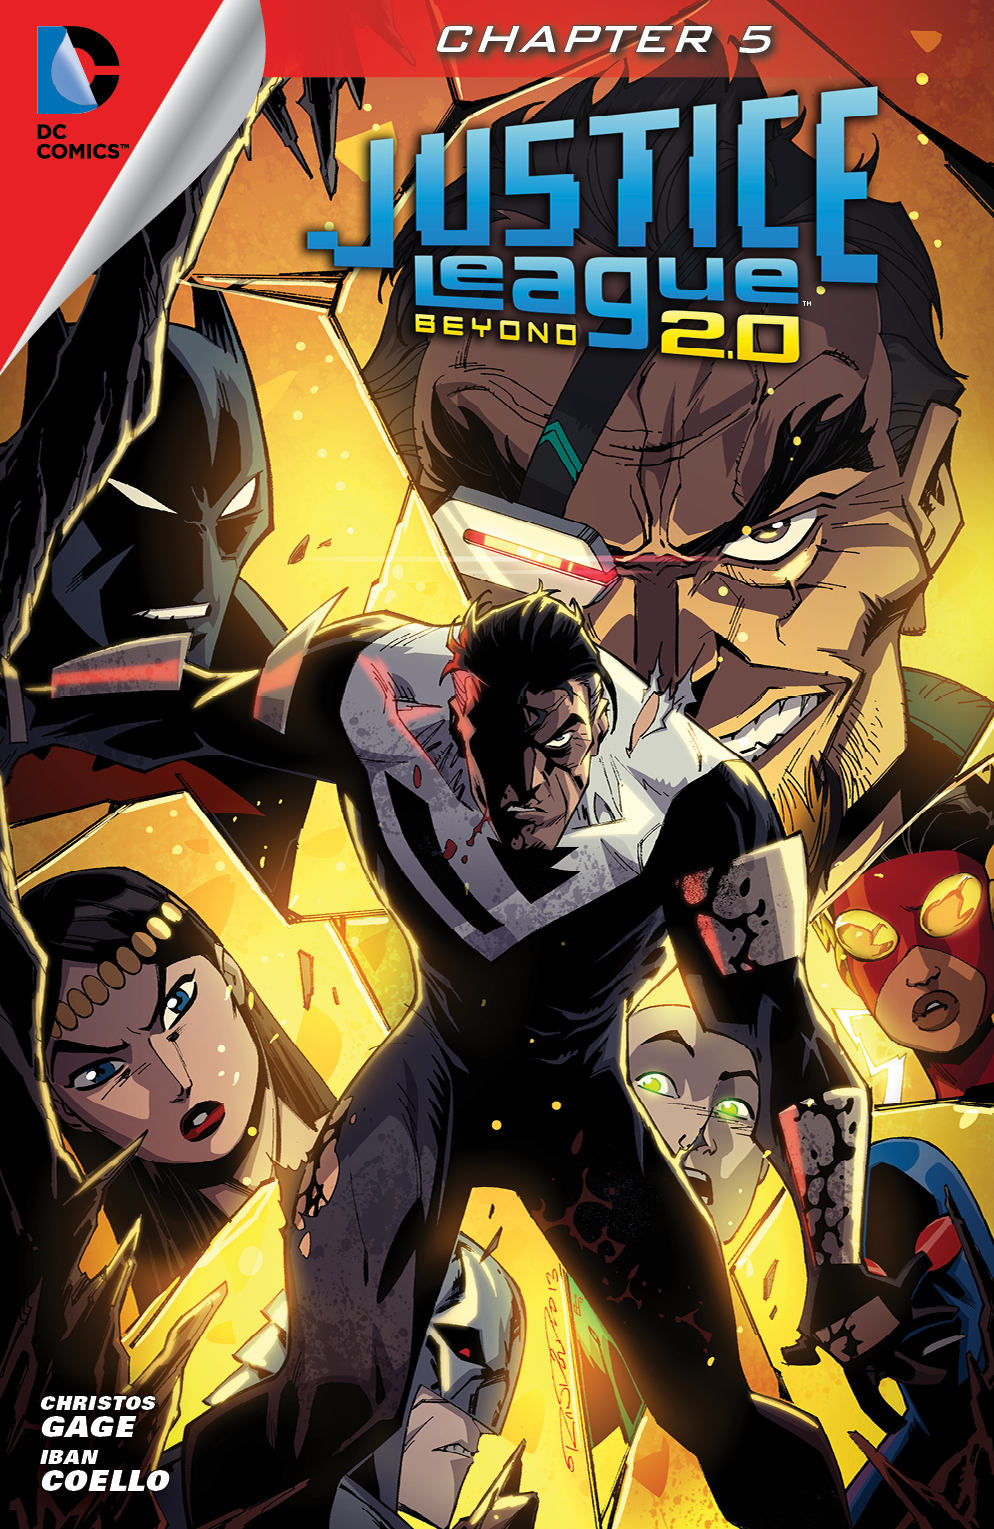 Justice League Beyond 2.0 #5 preview images